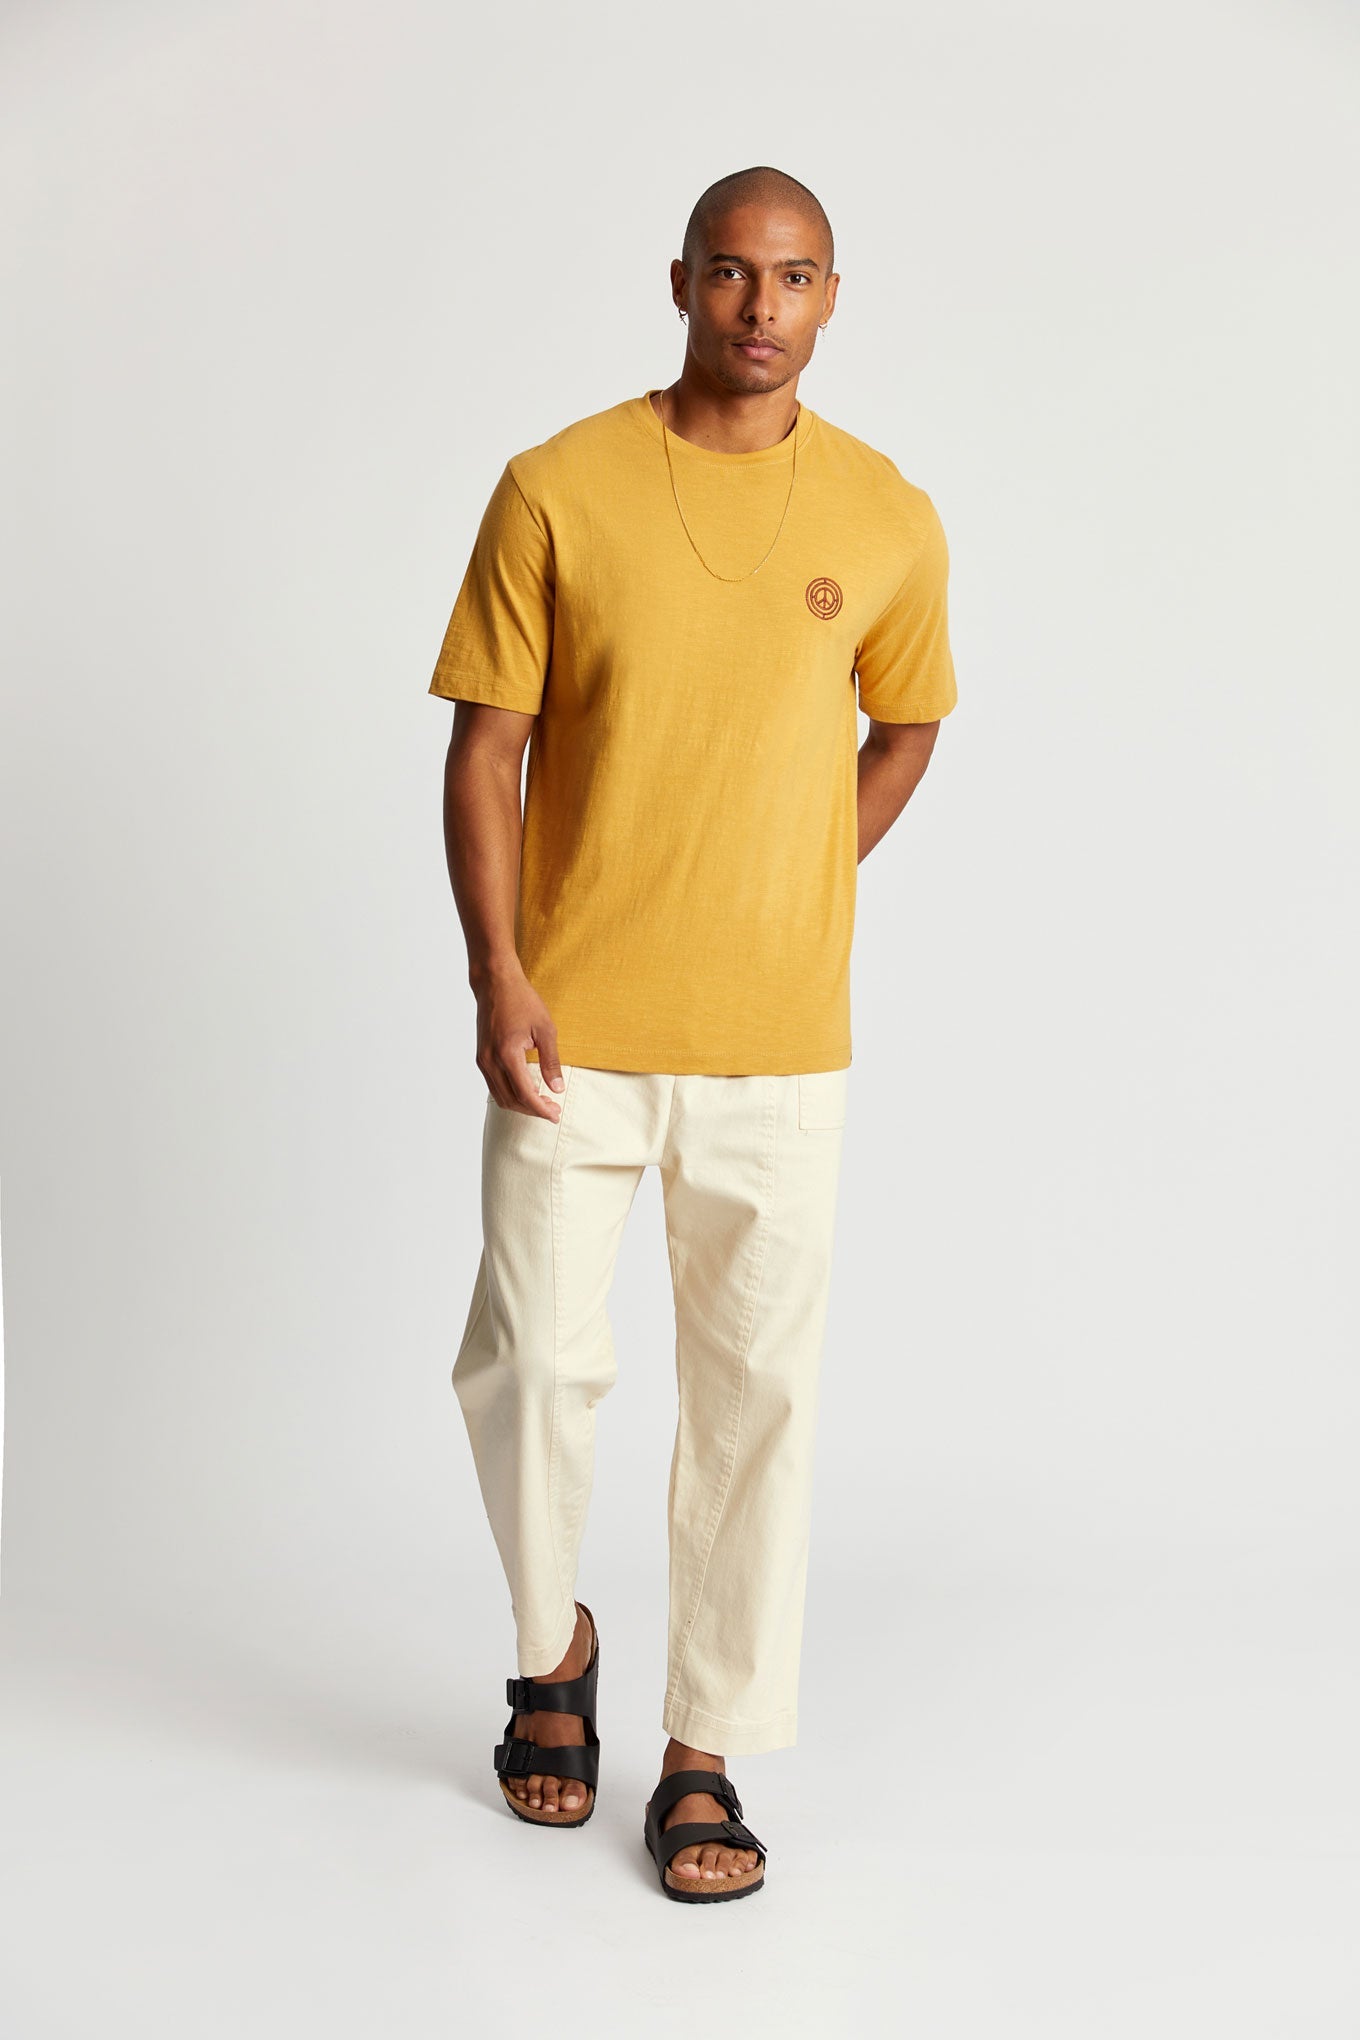 Yellow T-shirt KIN made of organic cotton from Komodo